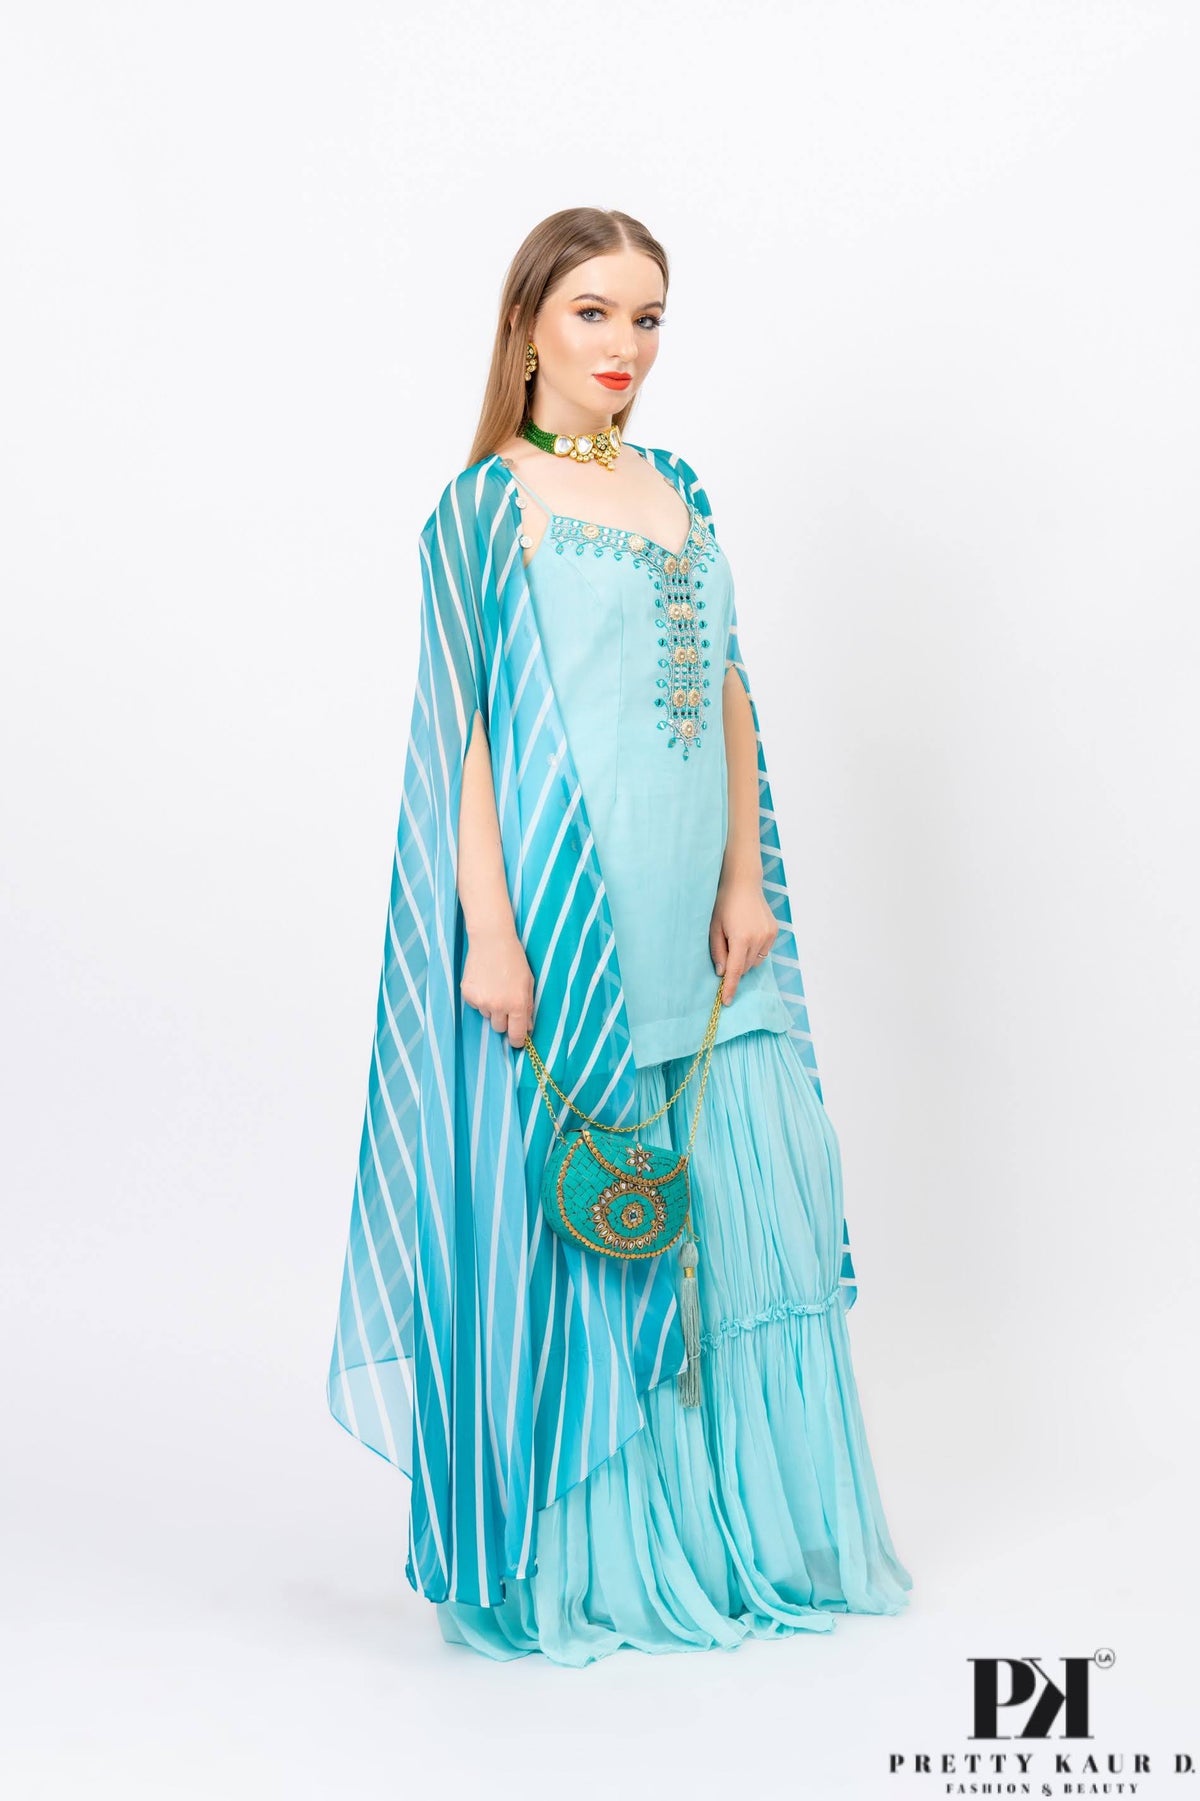  Pretty-Kaur-fashion-beauty-Blue-Long-Sharara-4